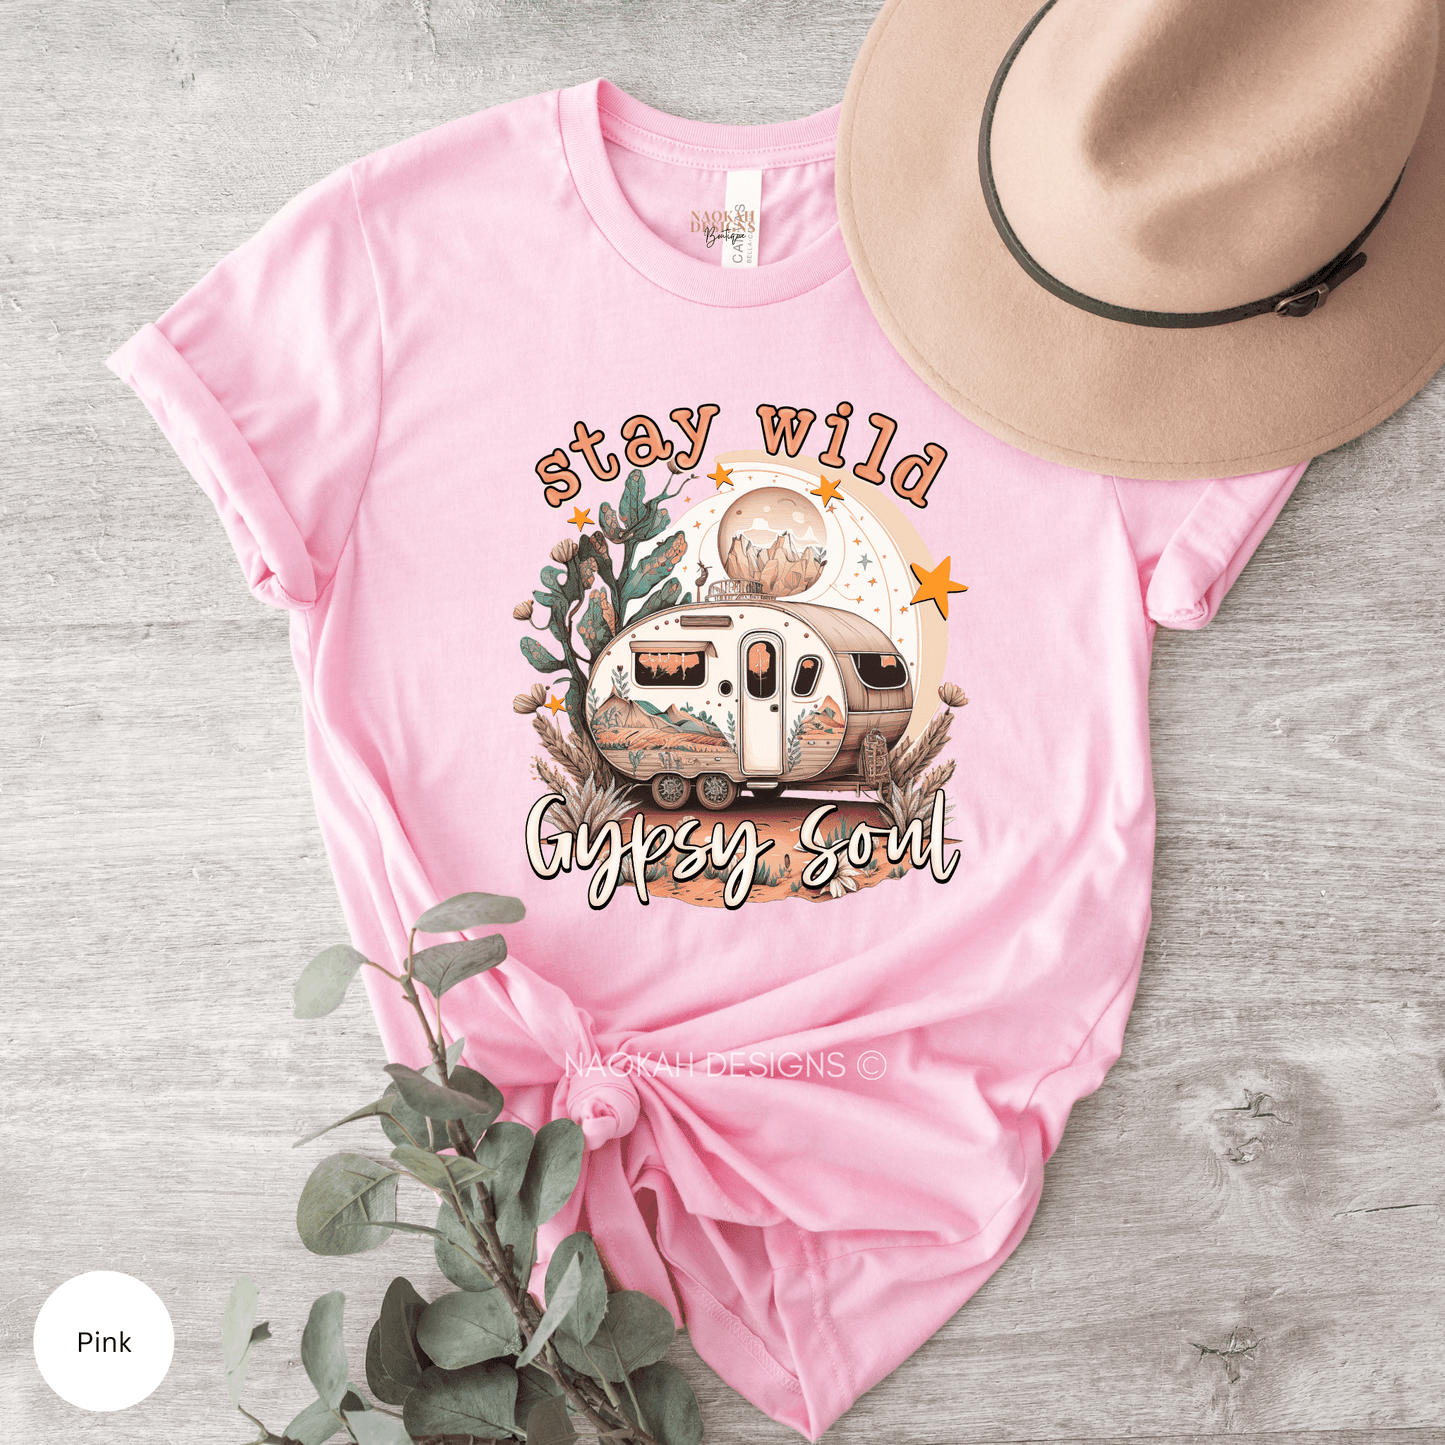 Stay Wild Gypsy Soul Shirt, Boho Cowgirl Shirt, Boho Western Shirt, Cowgirl Shirt, Gift for Country fan, Country Lover Shirt, Camping Shirt